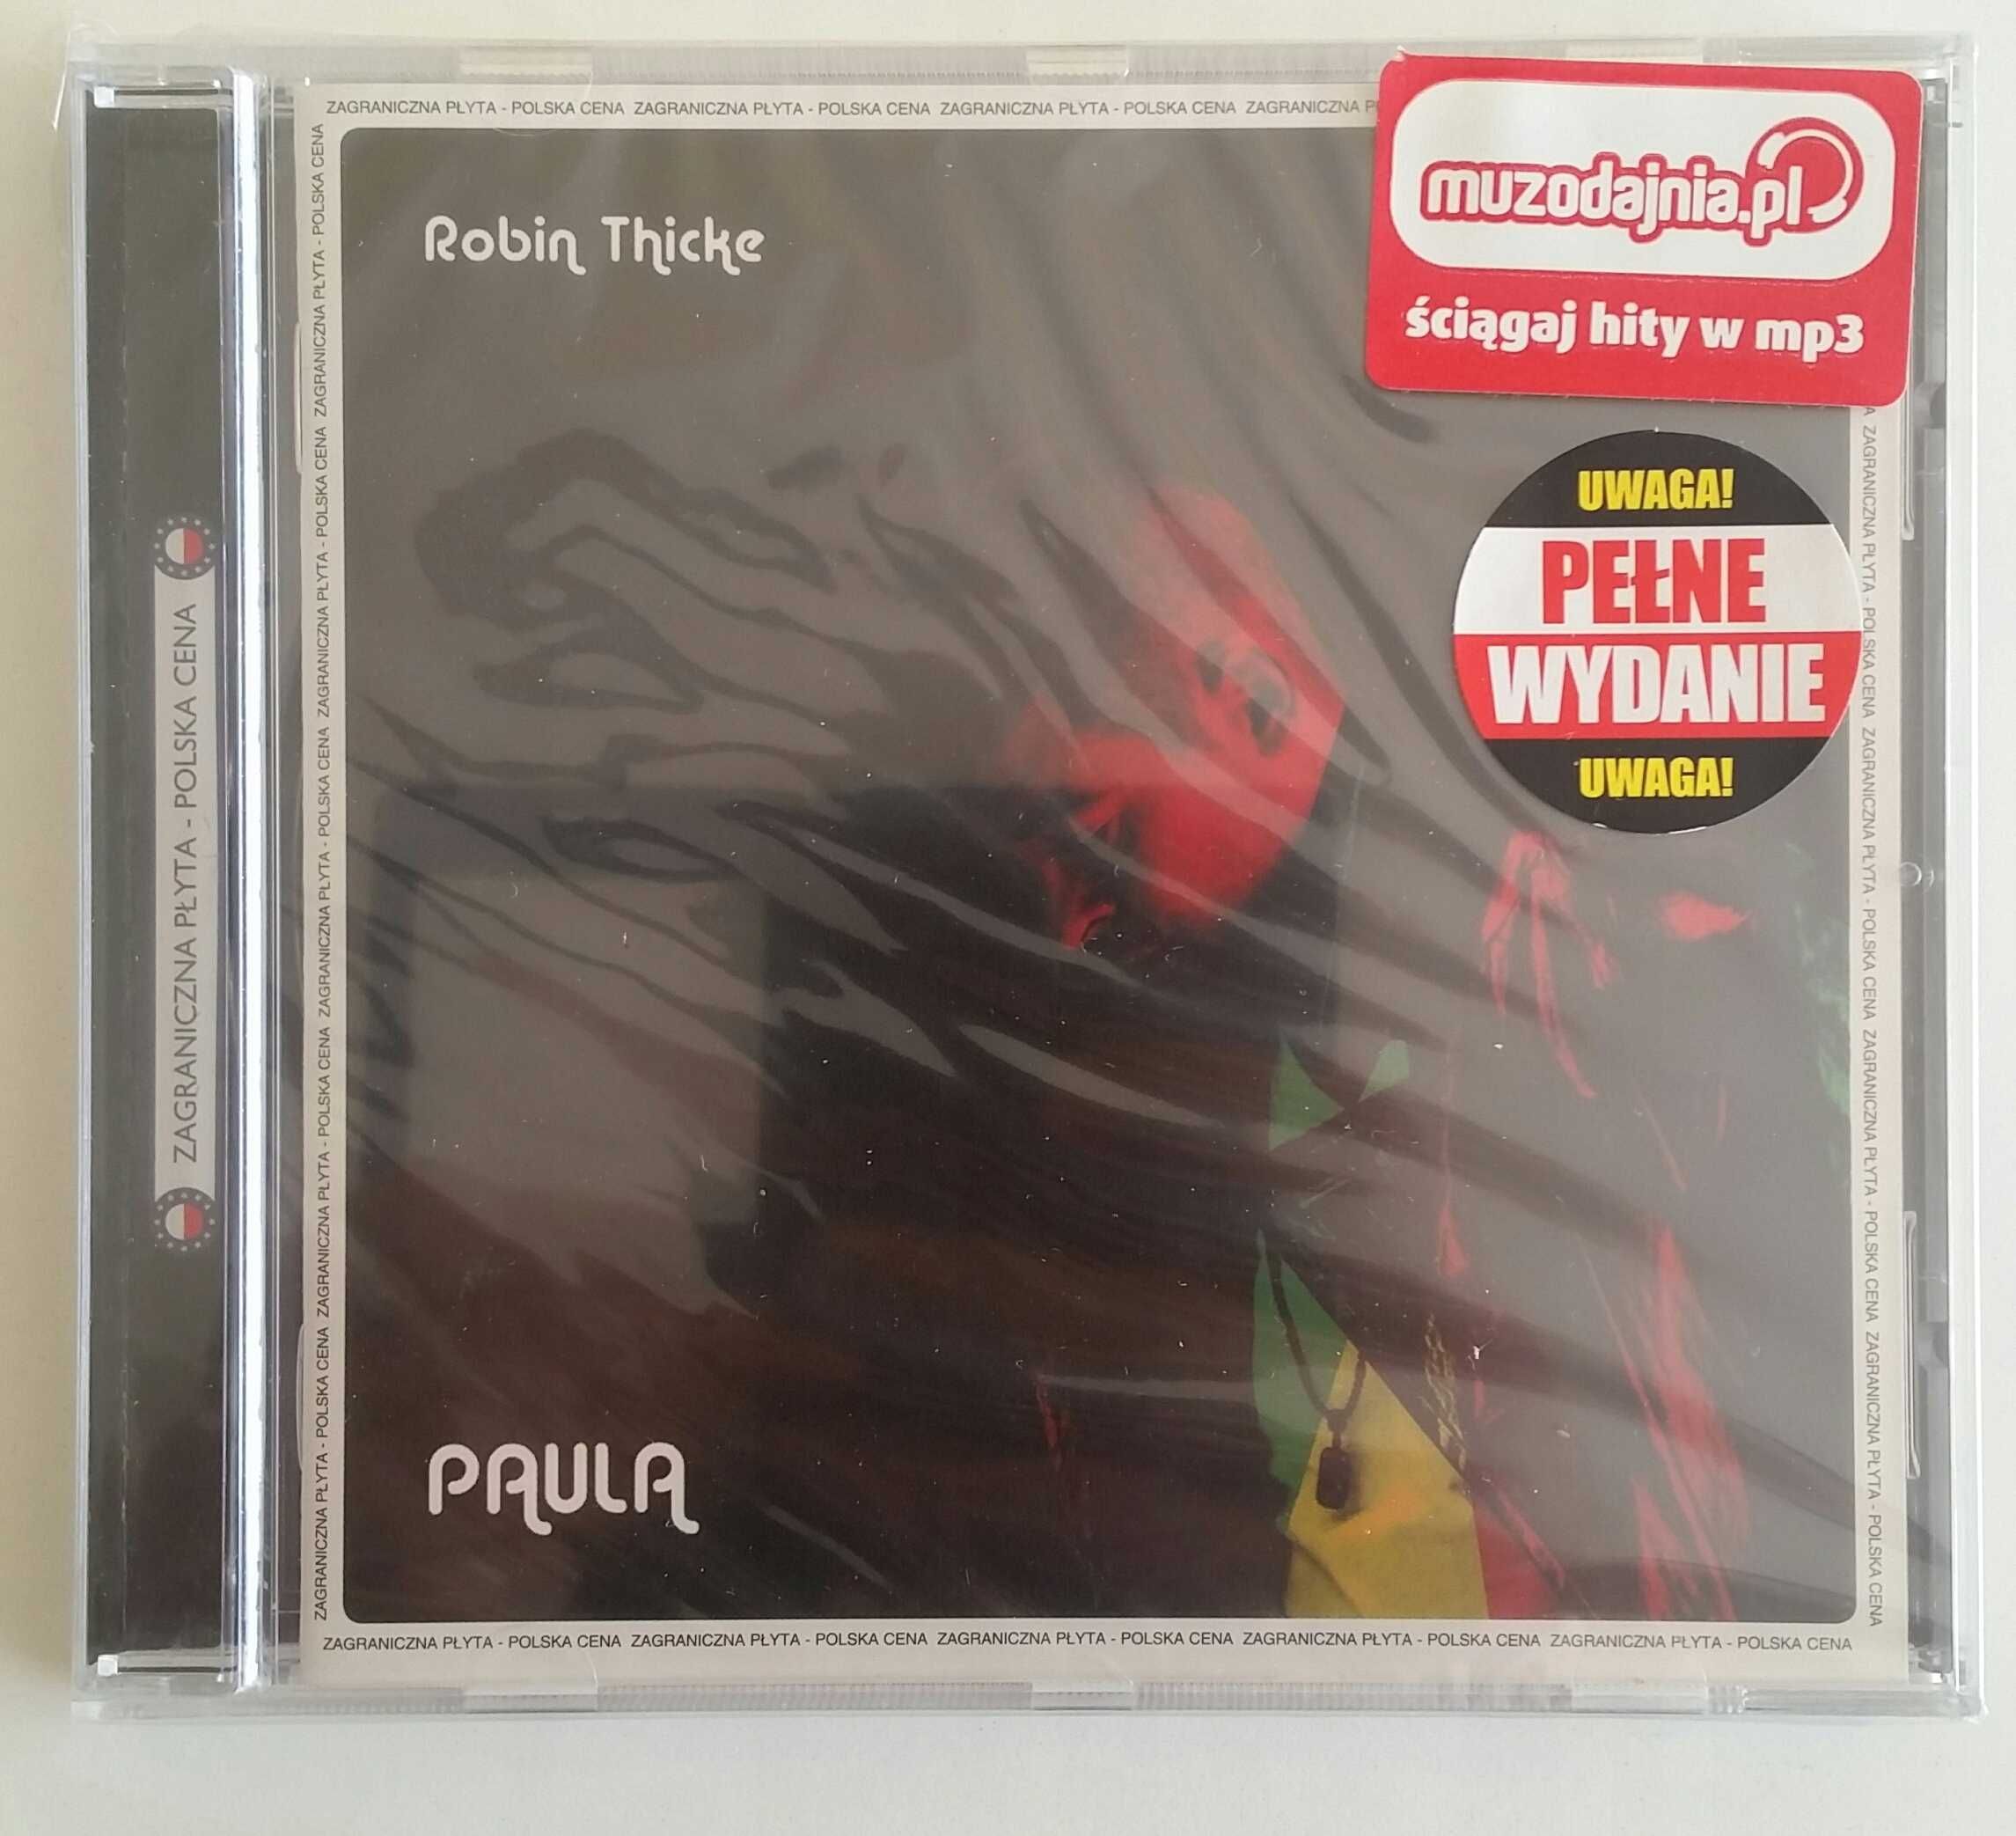 Robin Thicke "Paula" PL CD (Nowa w folii)